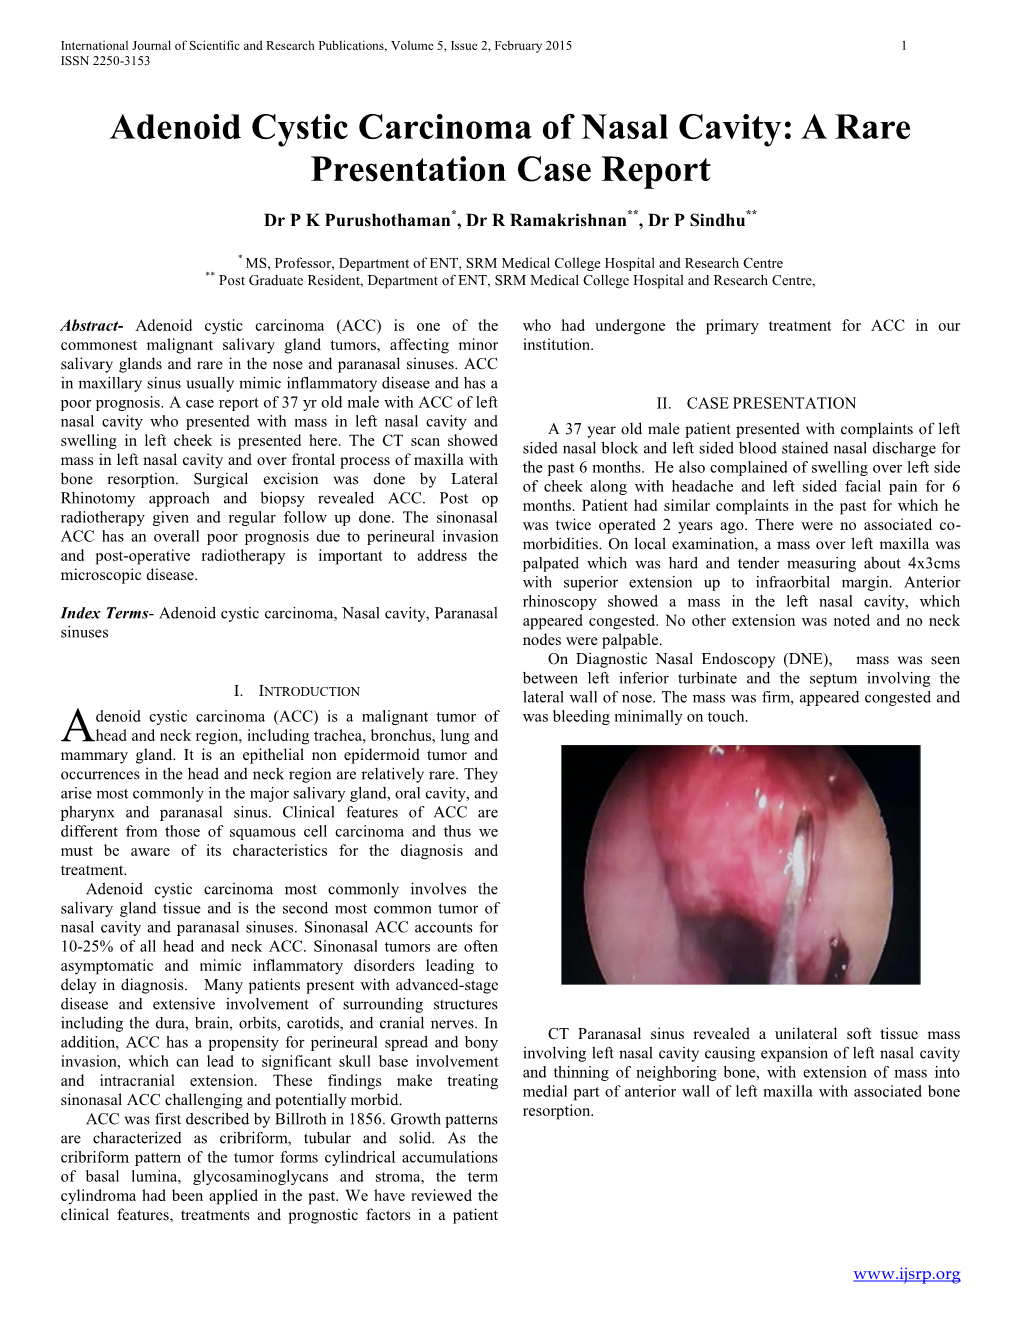 Adenoid Cystic Carcinoma of Nasal Cavity: a Rare Presentation Case Report